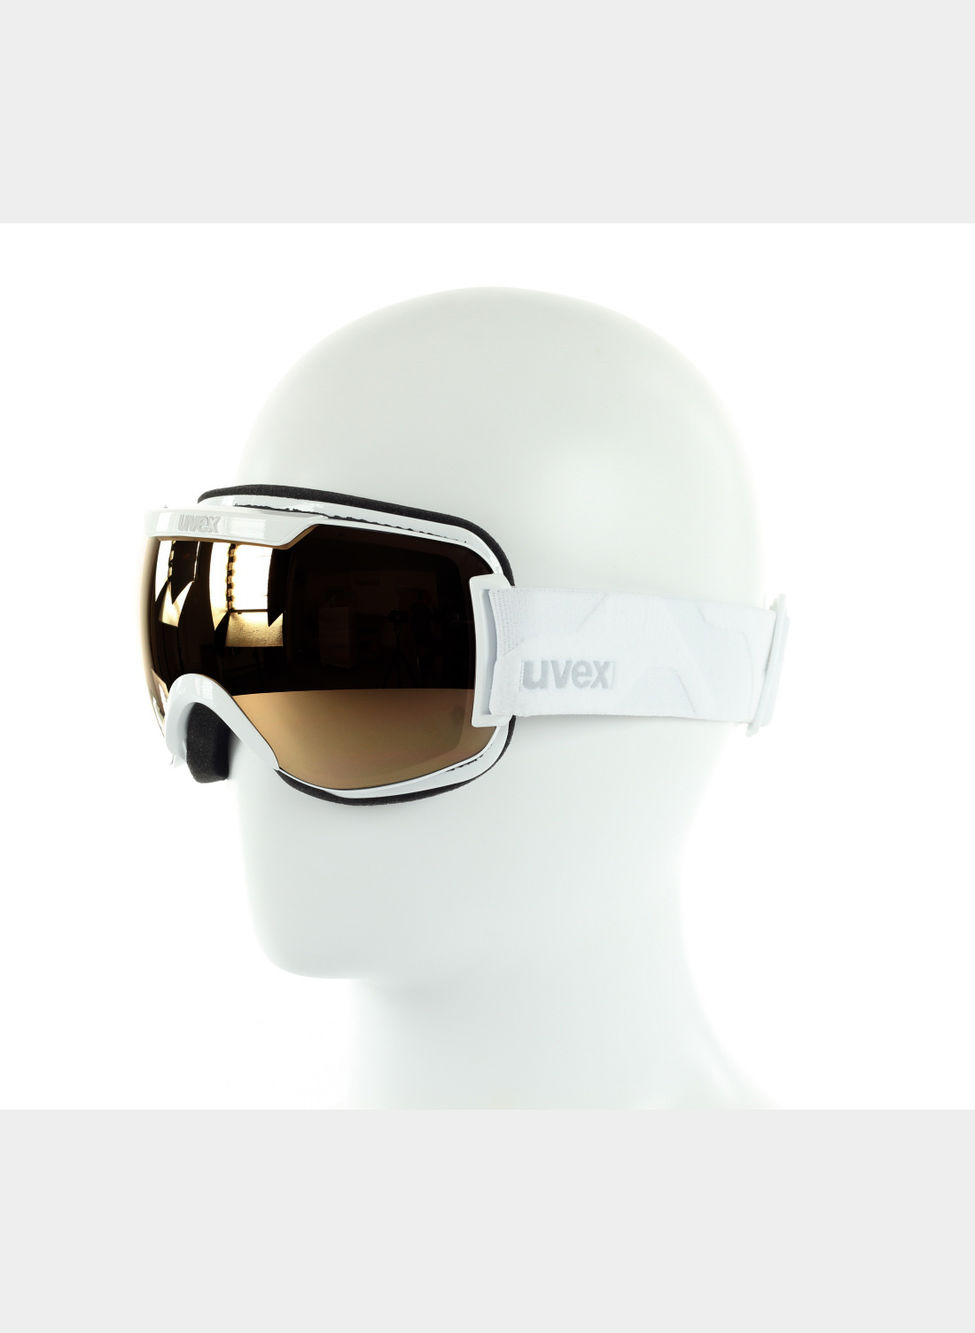 Uvex Downhill 2100 WE Glamour Maschera da Sci - Maschere da sci - Maschere  da sci e accessori - Sci&Freeride - Tutti